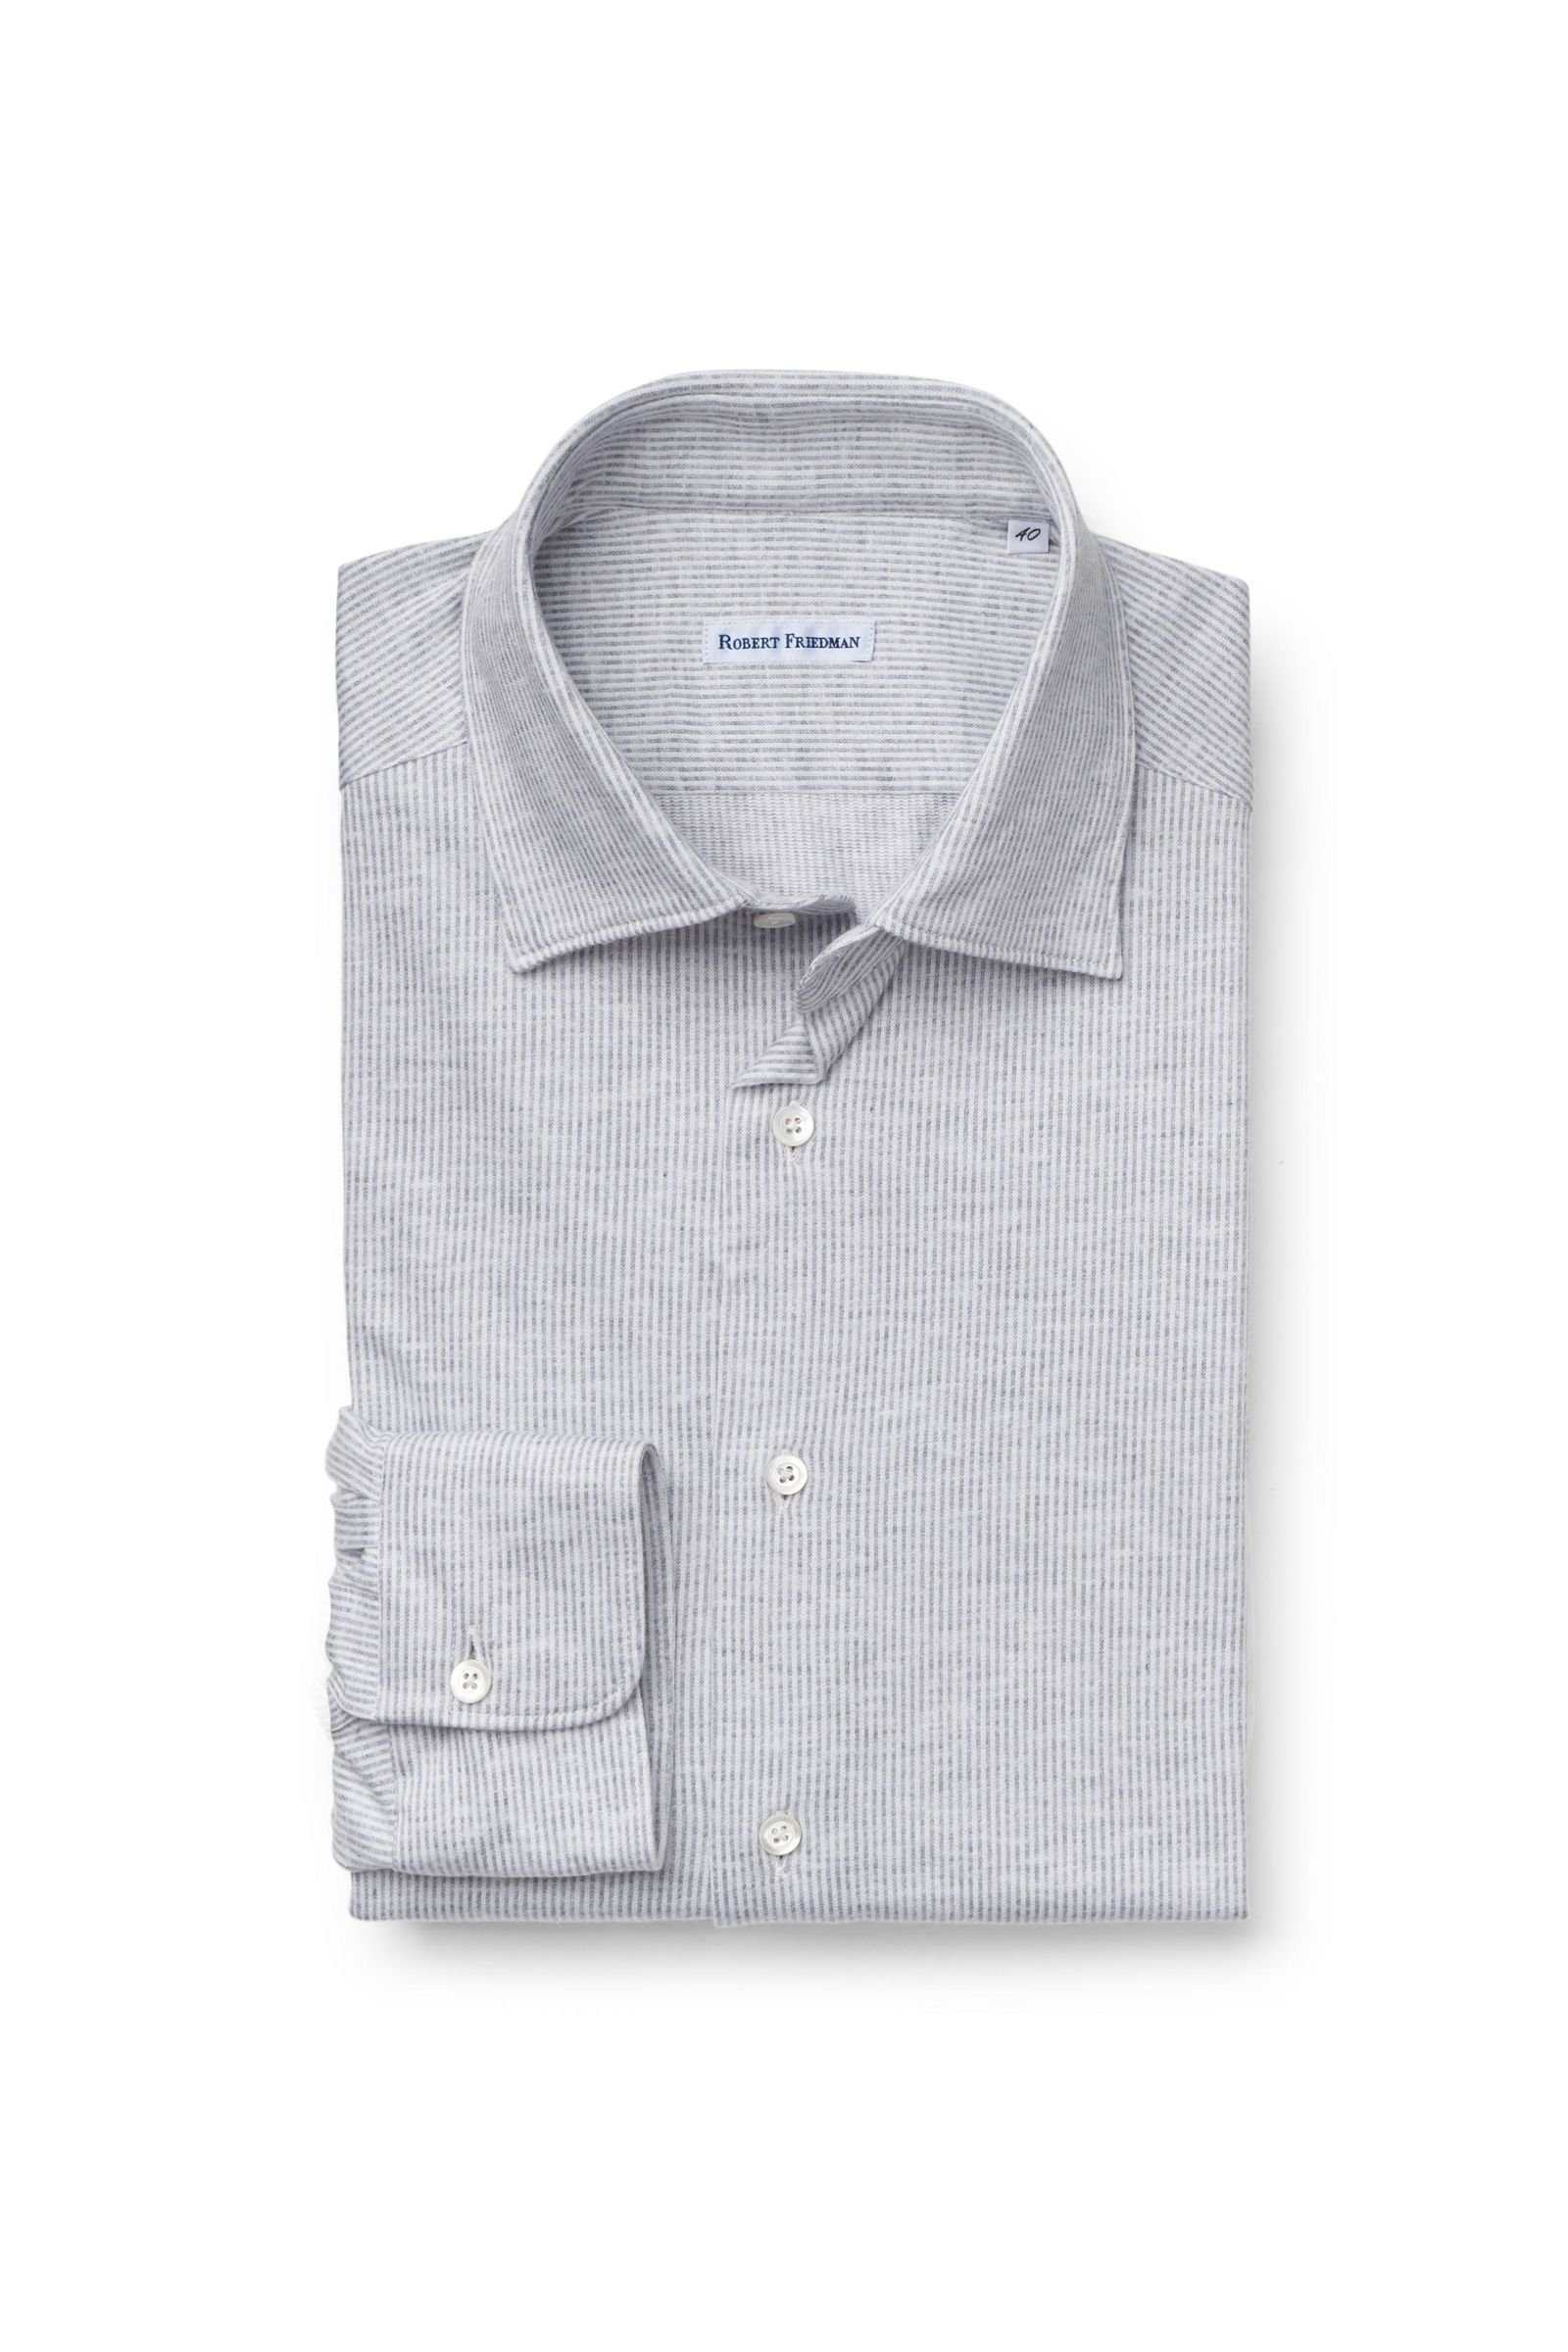 Jersey shirt 'Leo' narrow collar grey/white striped